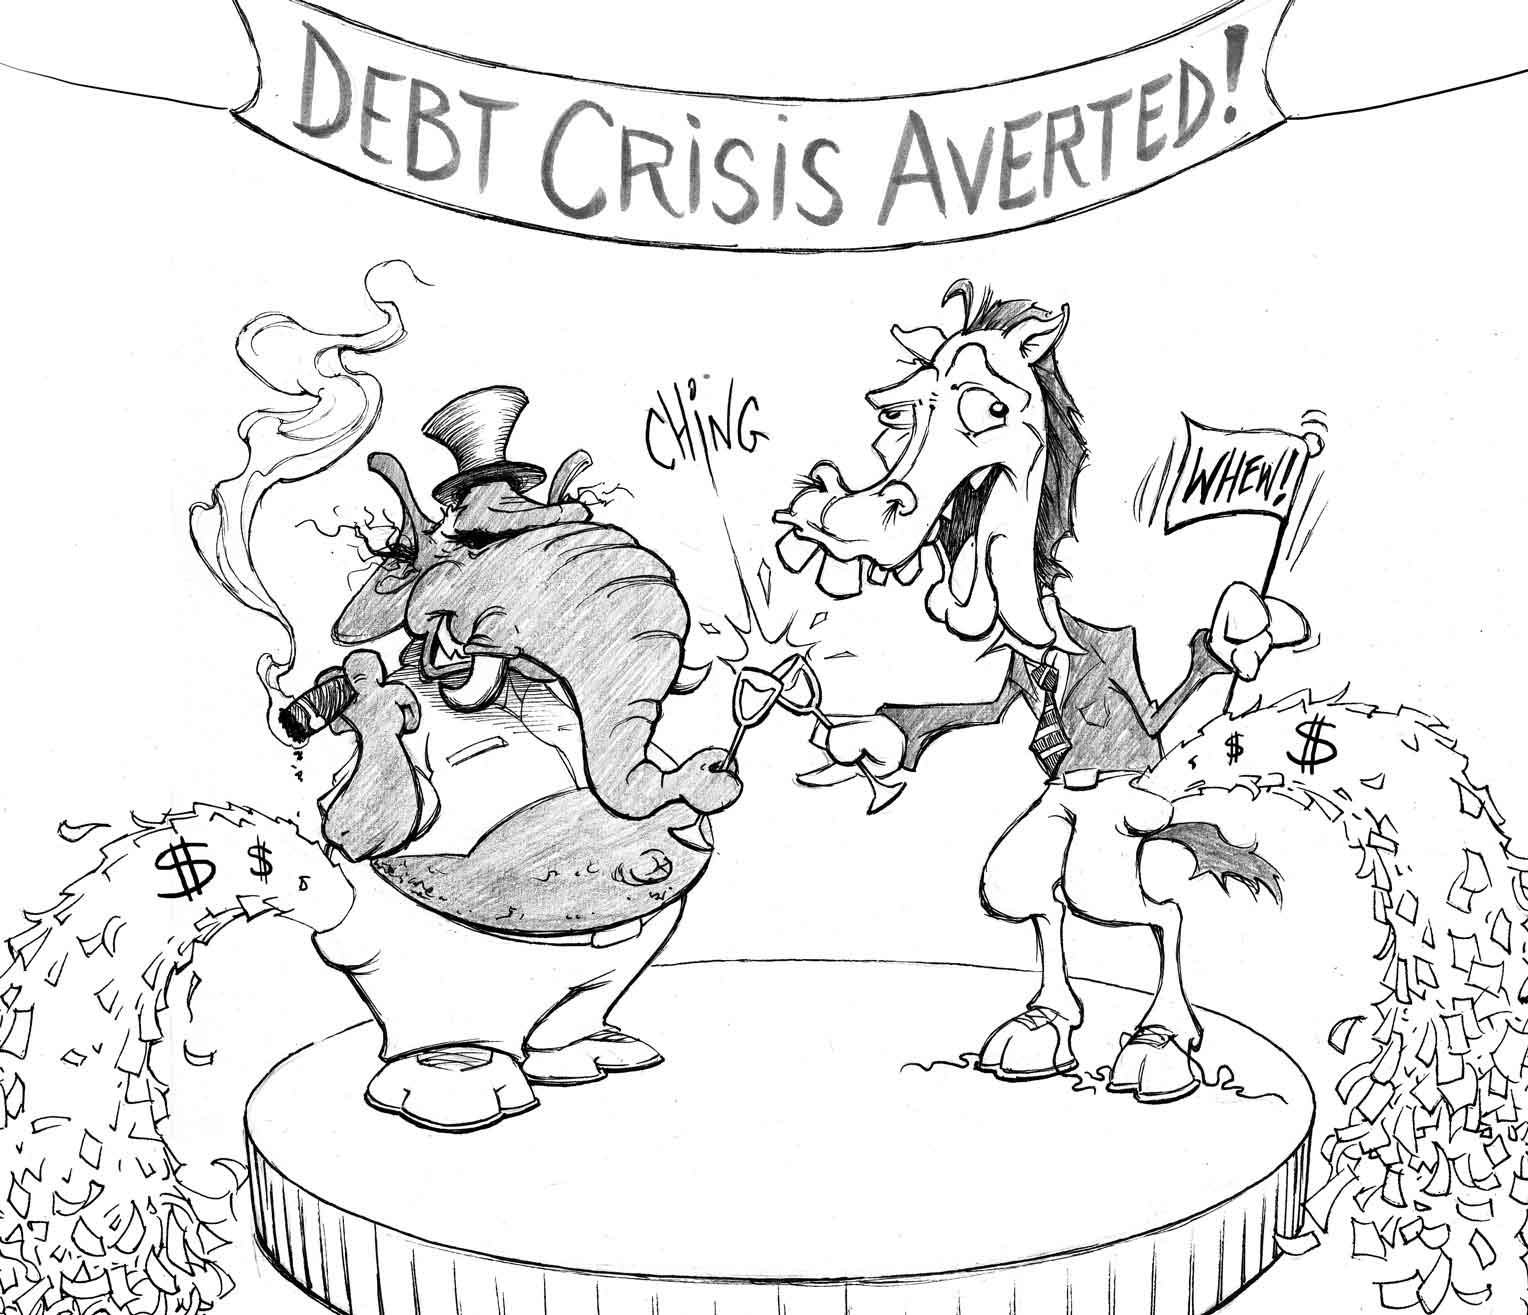 Debt Crisis Averted! (detail) - Kipp T. Jarden